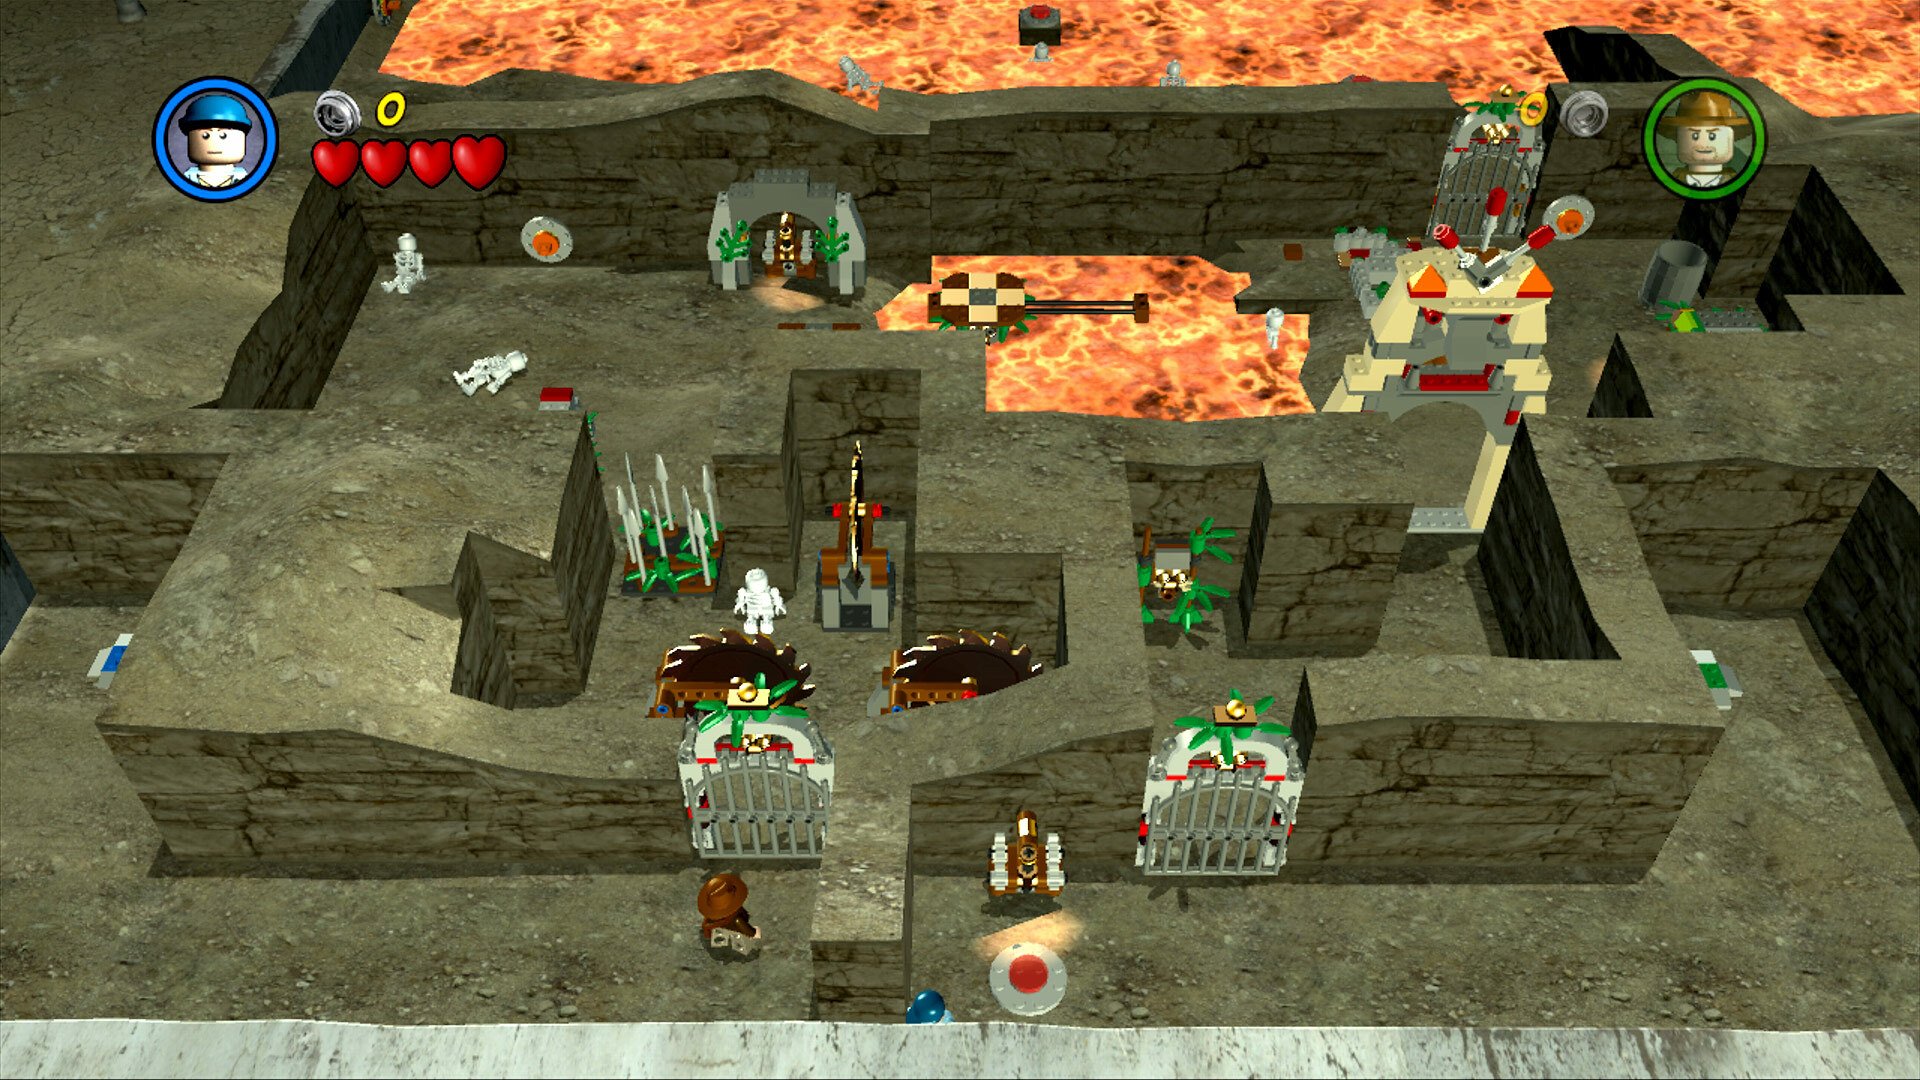 Скриншот 2 к игре LEGO Indiana Jones 2: The Adventure Continues v1.0 [GOG] (2010)